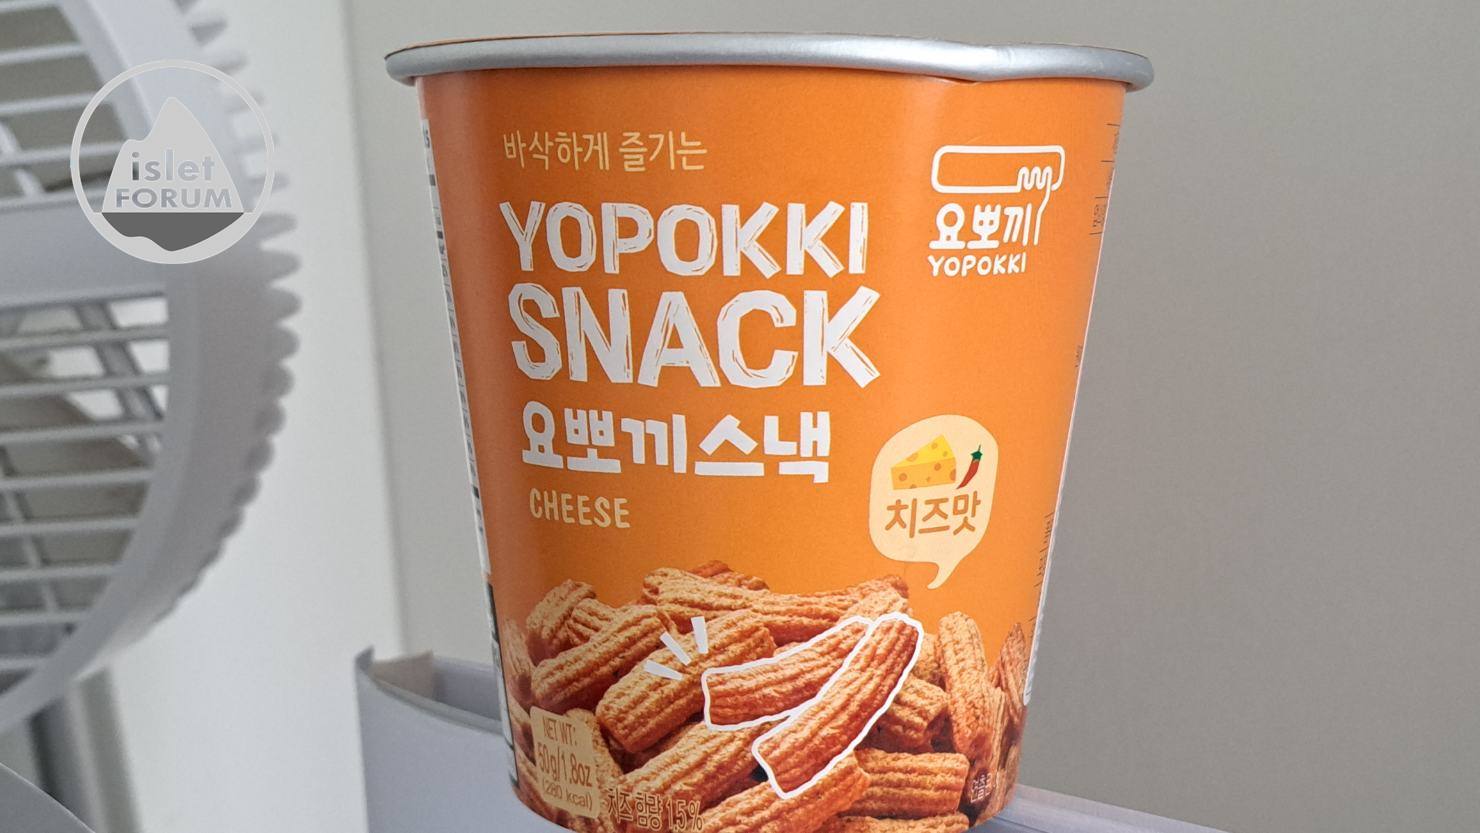 Korea Young Poong Yopokki Snack Cup 50g  韓國脆年糕條零食 (1).jpg